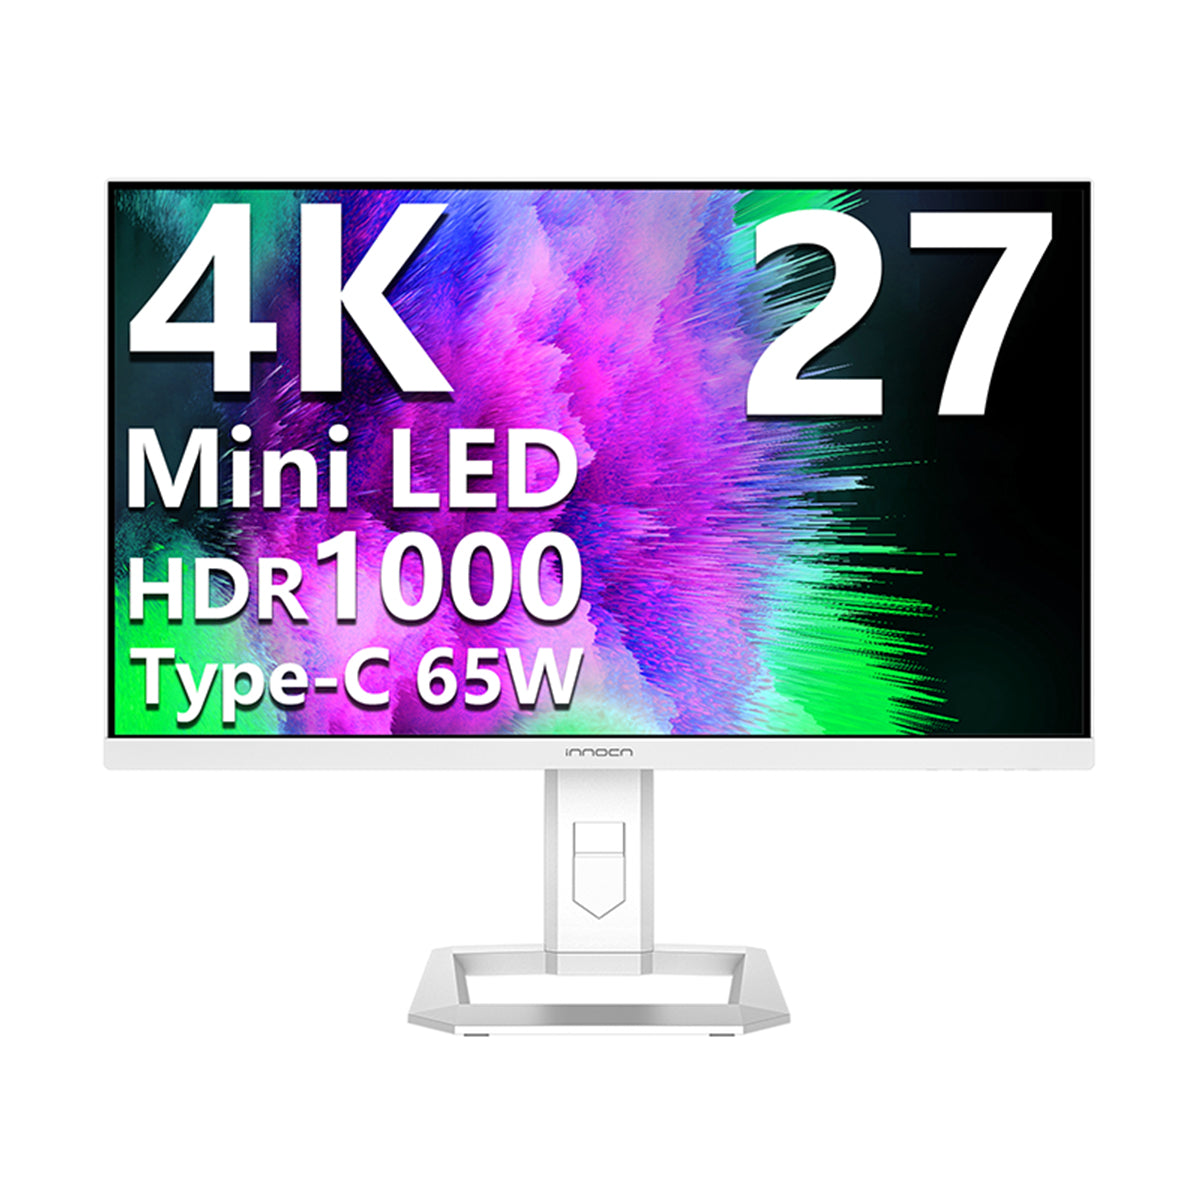 Innocn 32Q1U 32 Inch OLED 4K Computer Monitor Going on Sale